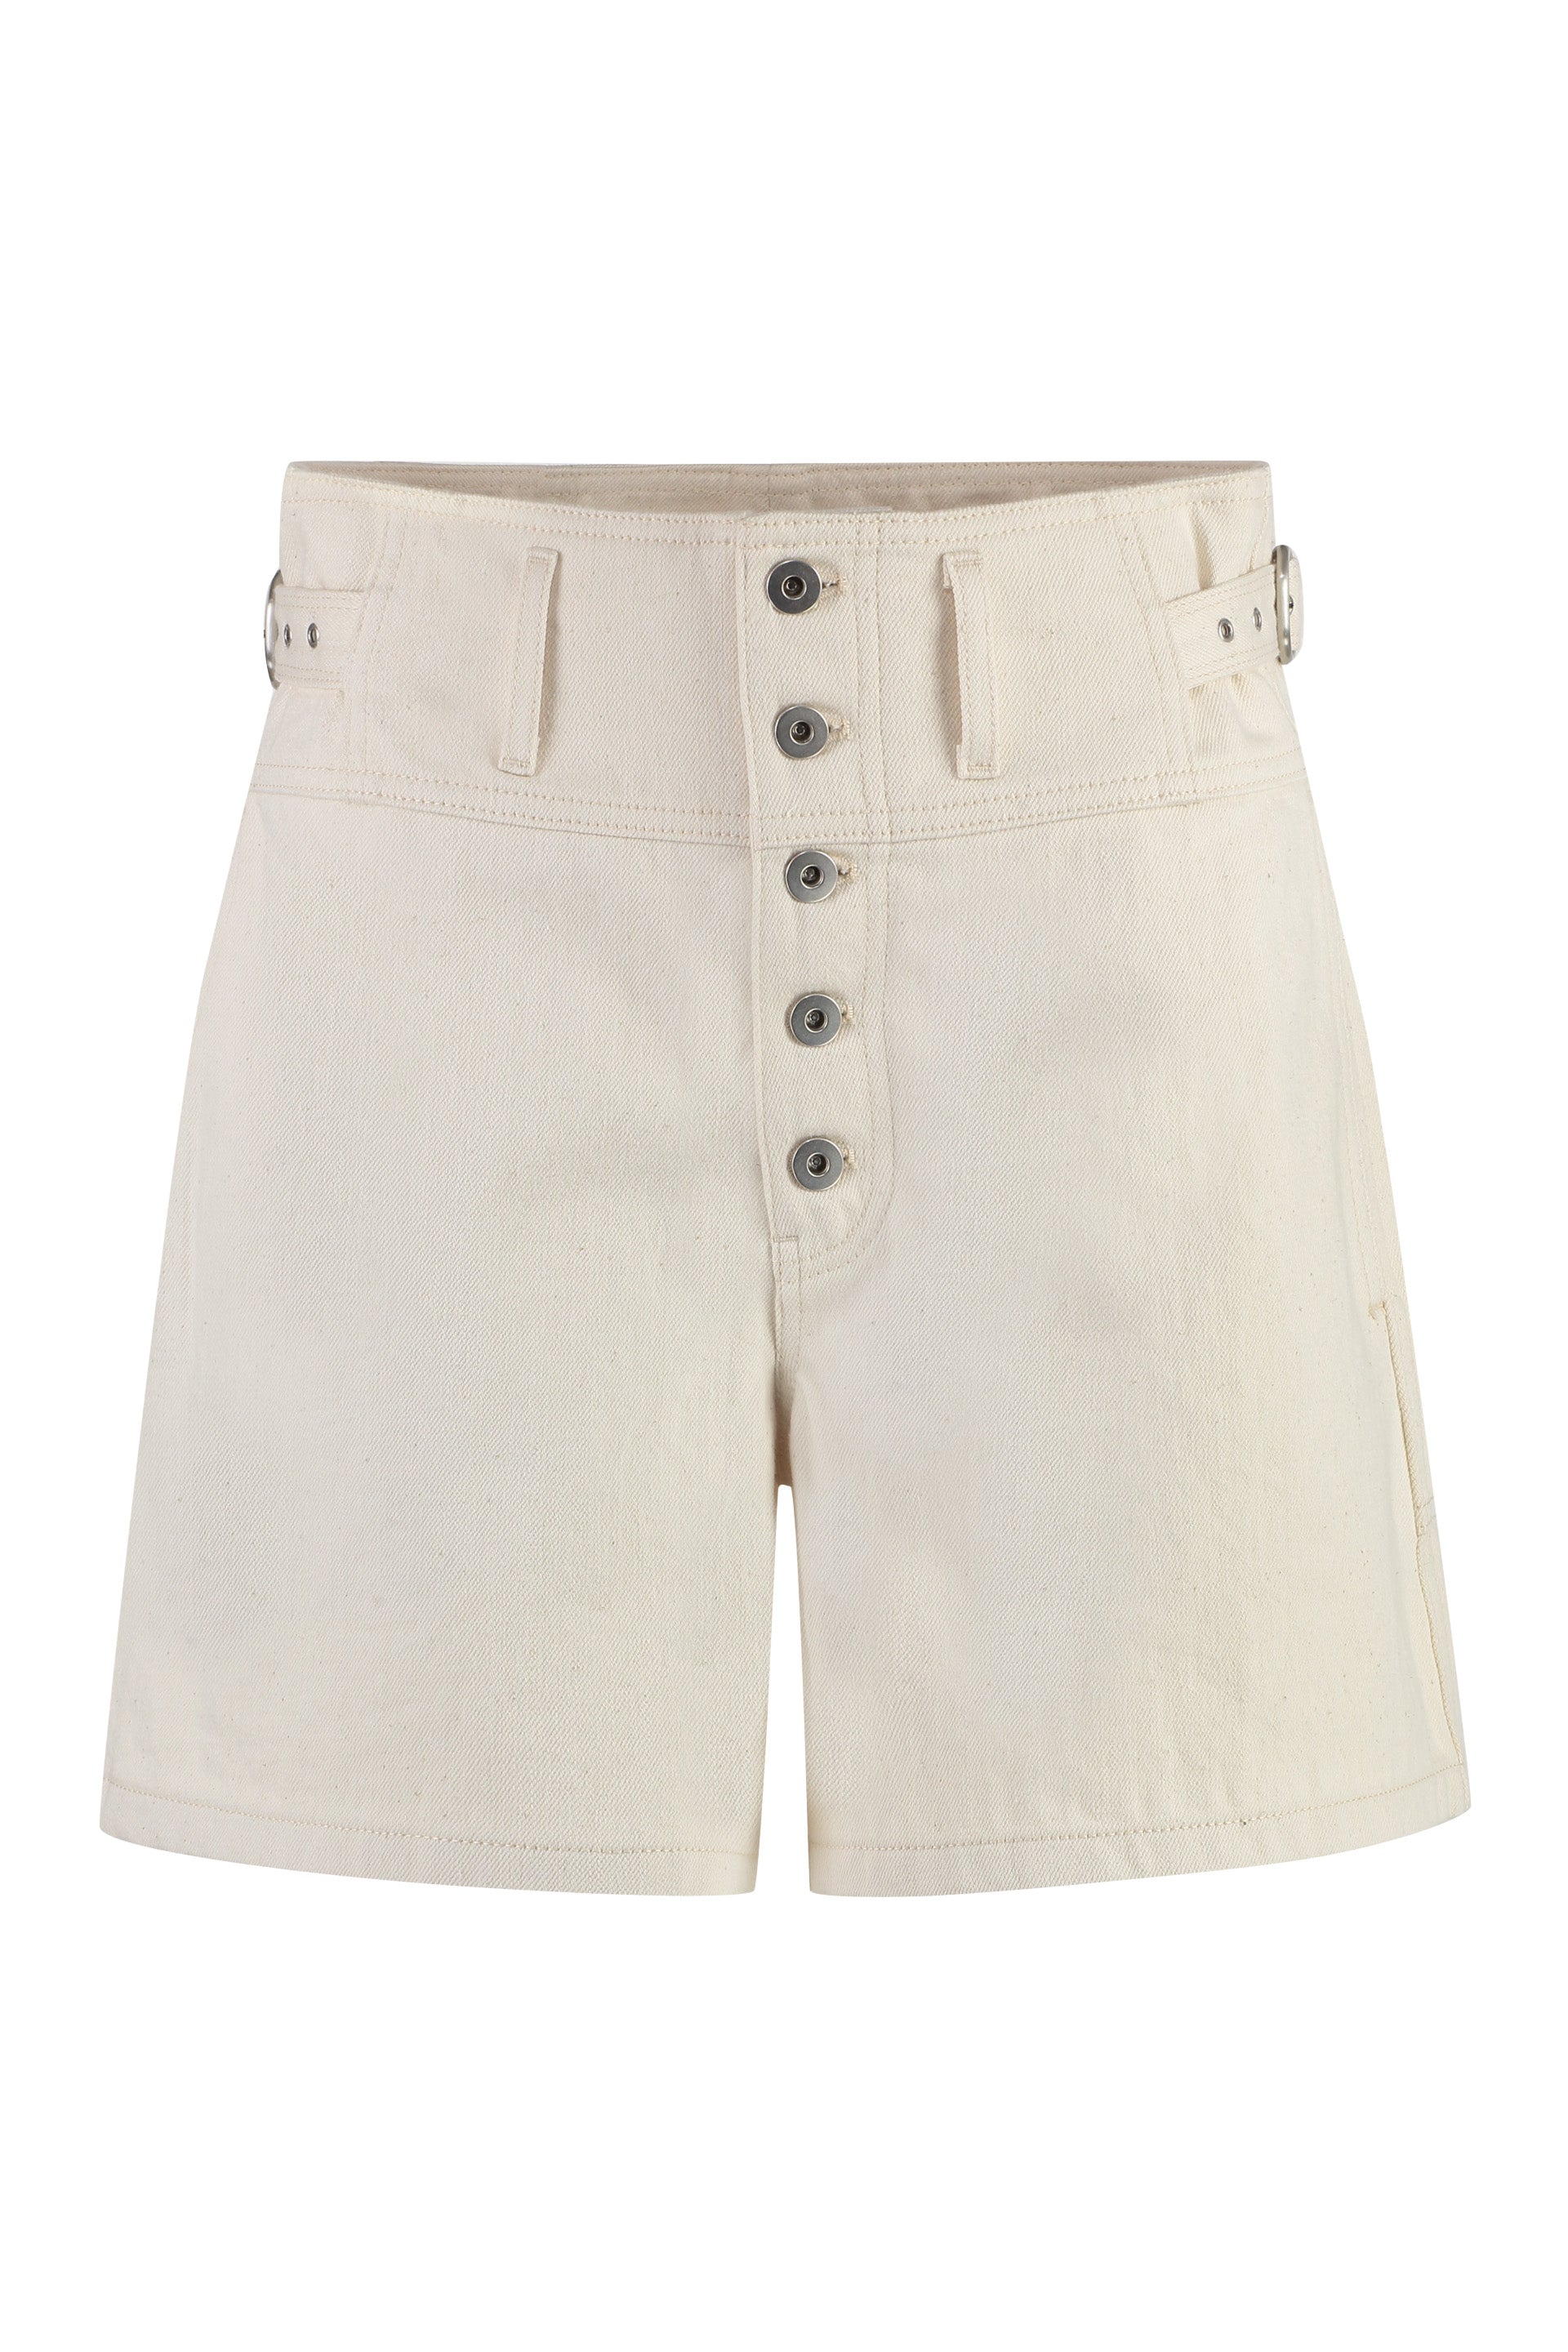 Jil Sander Beige Denim Shorts With Pockets For Women In White